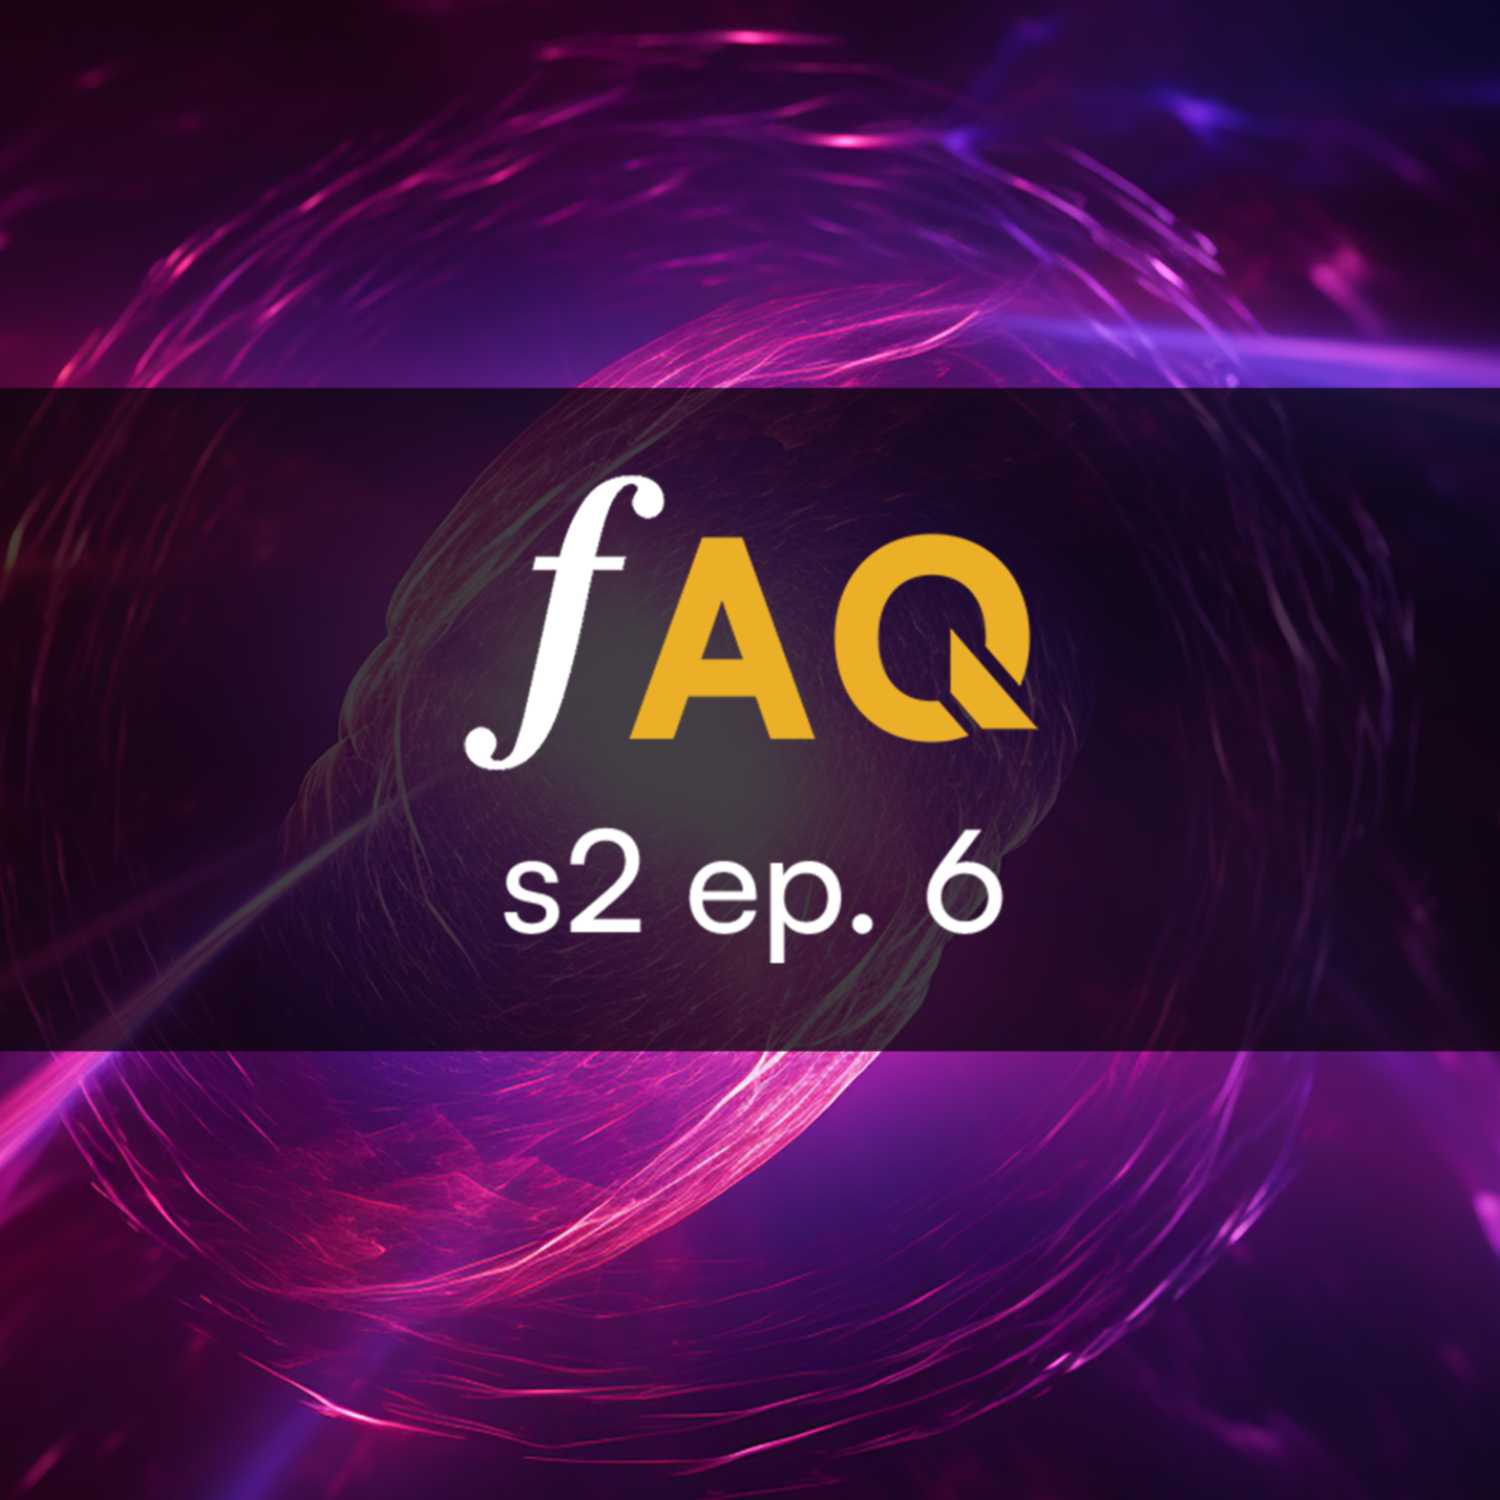 Measuring quantum states with light | fAQ podcast - season 2 ep. 6